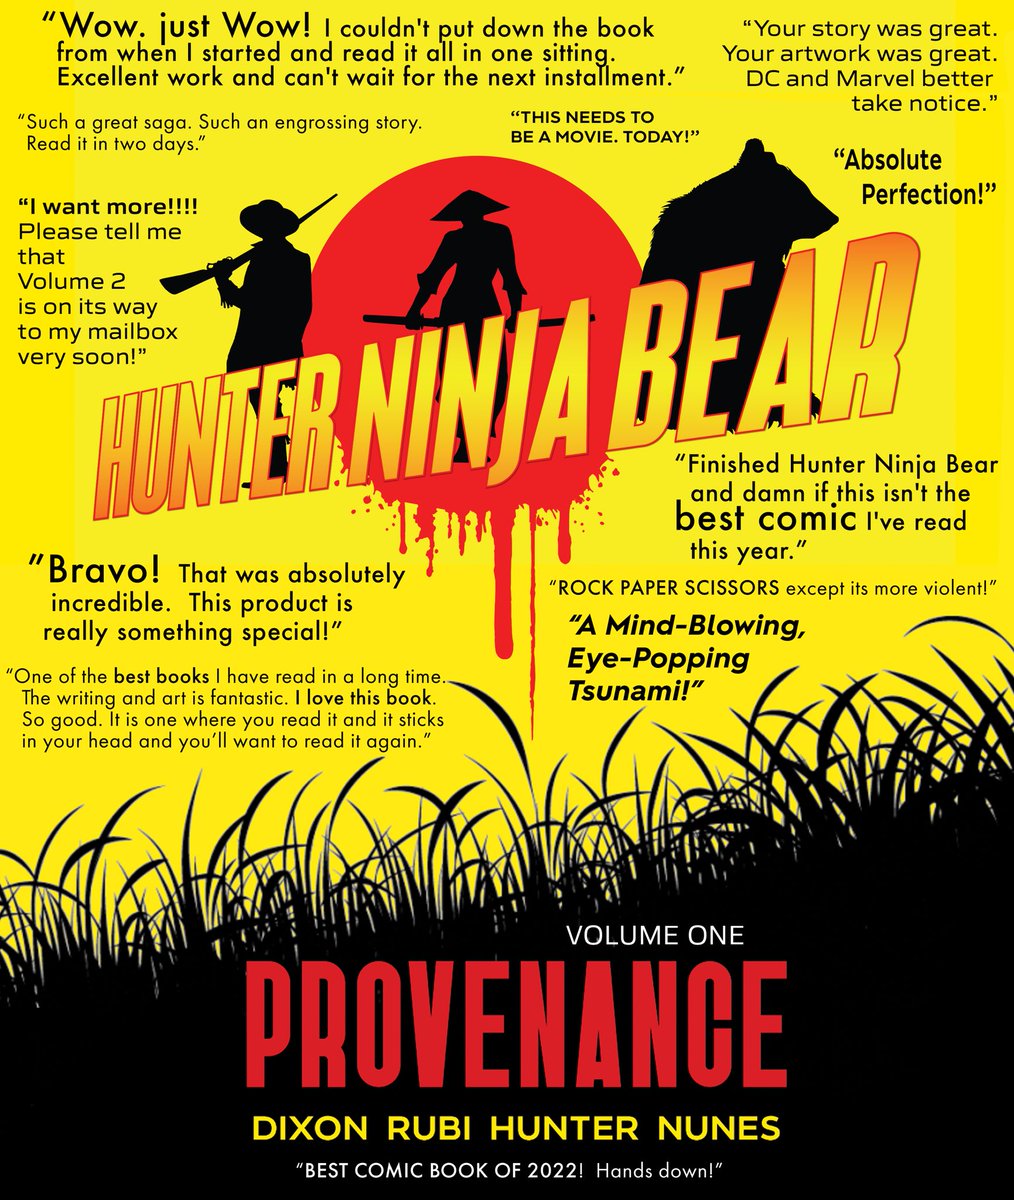 Pick up a copy today! #comics #newcomics #hunter #ninja #bear @elonmusk